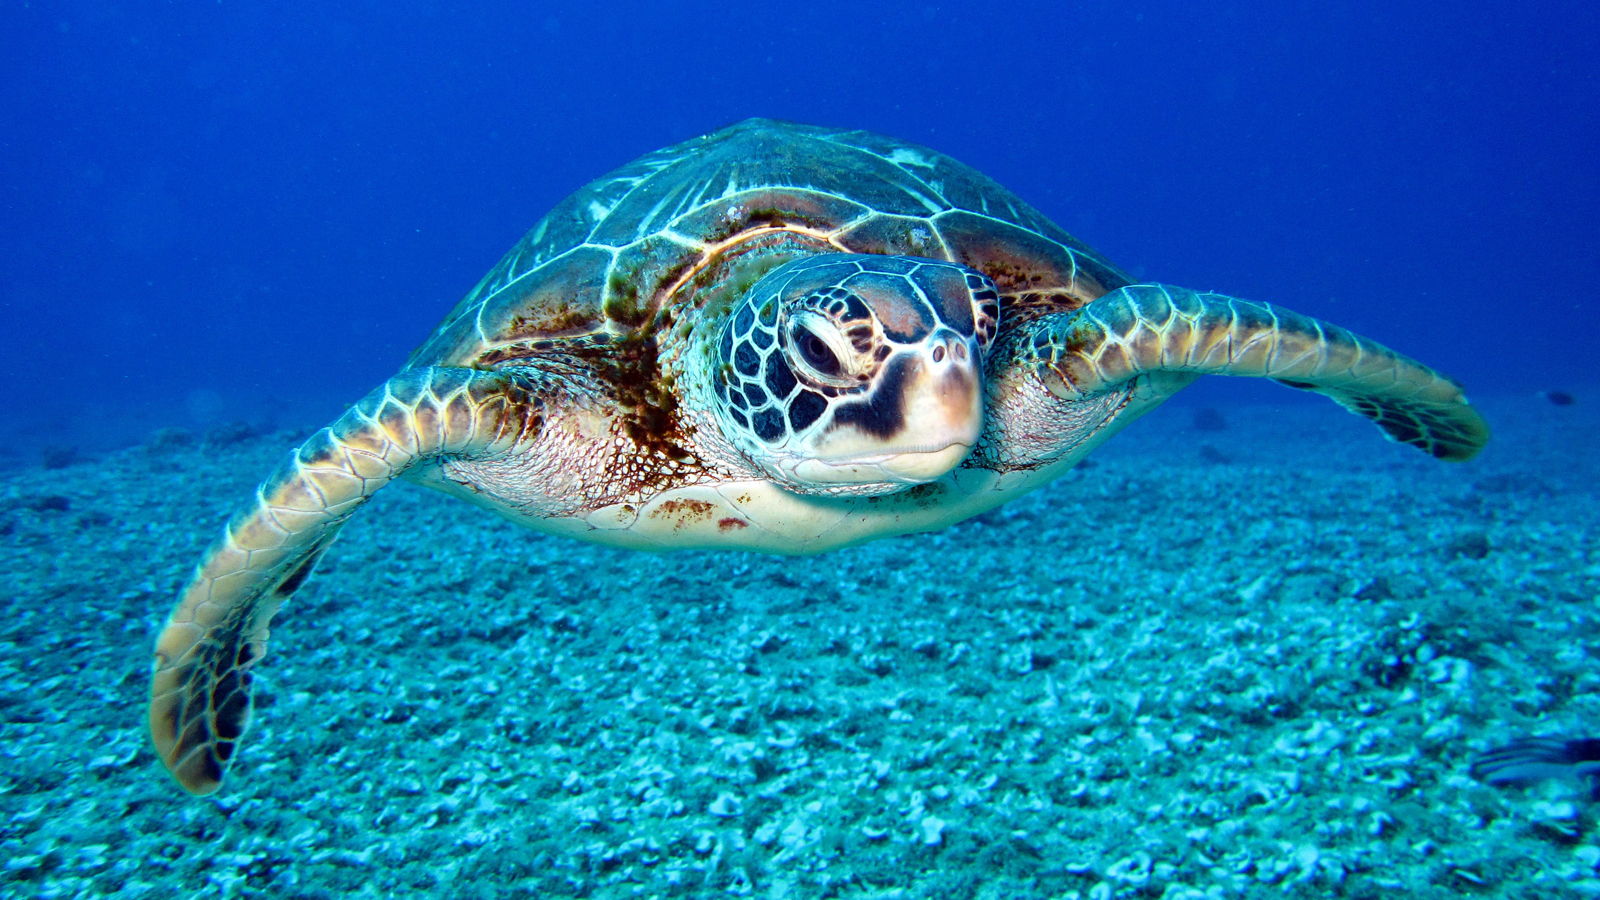 Green Sea Turtles Love Warm Waters Of The Florida Keys